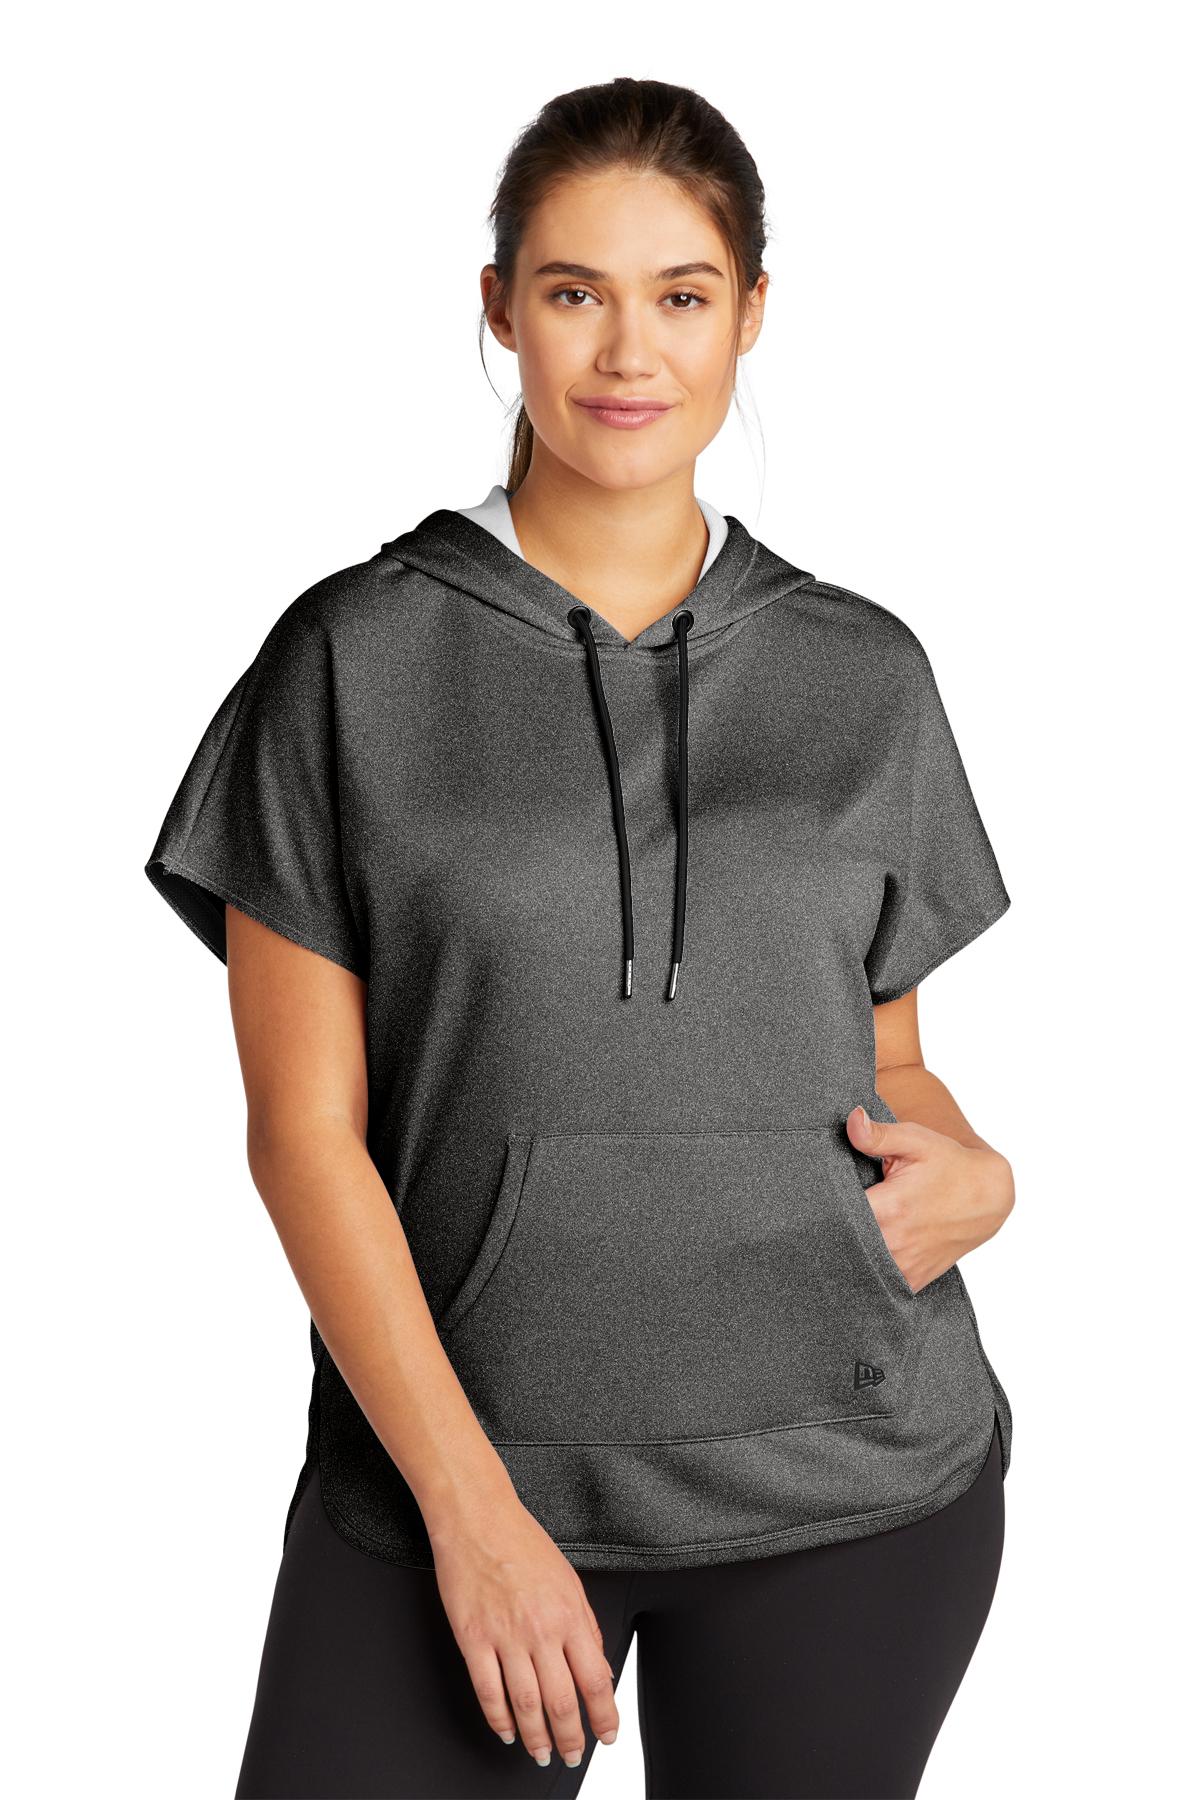 Women's Concepts Sport Oatmeal Carolina Hurricanes Tri-Blend Mainstream Terry Short Sleeve Sweatshirt Top Size: Medium